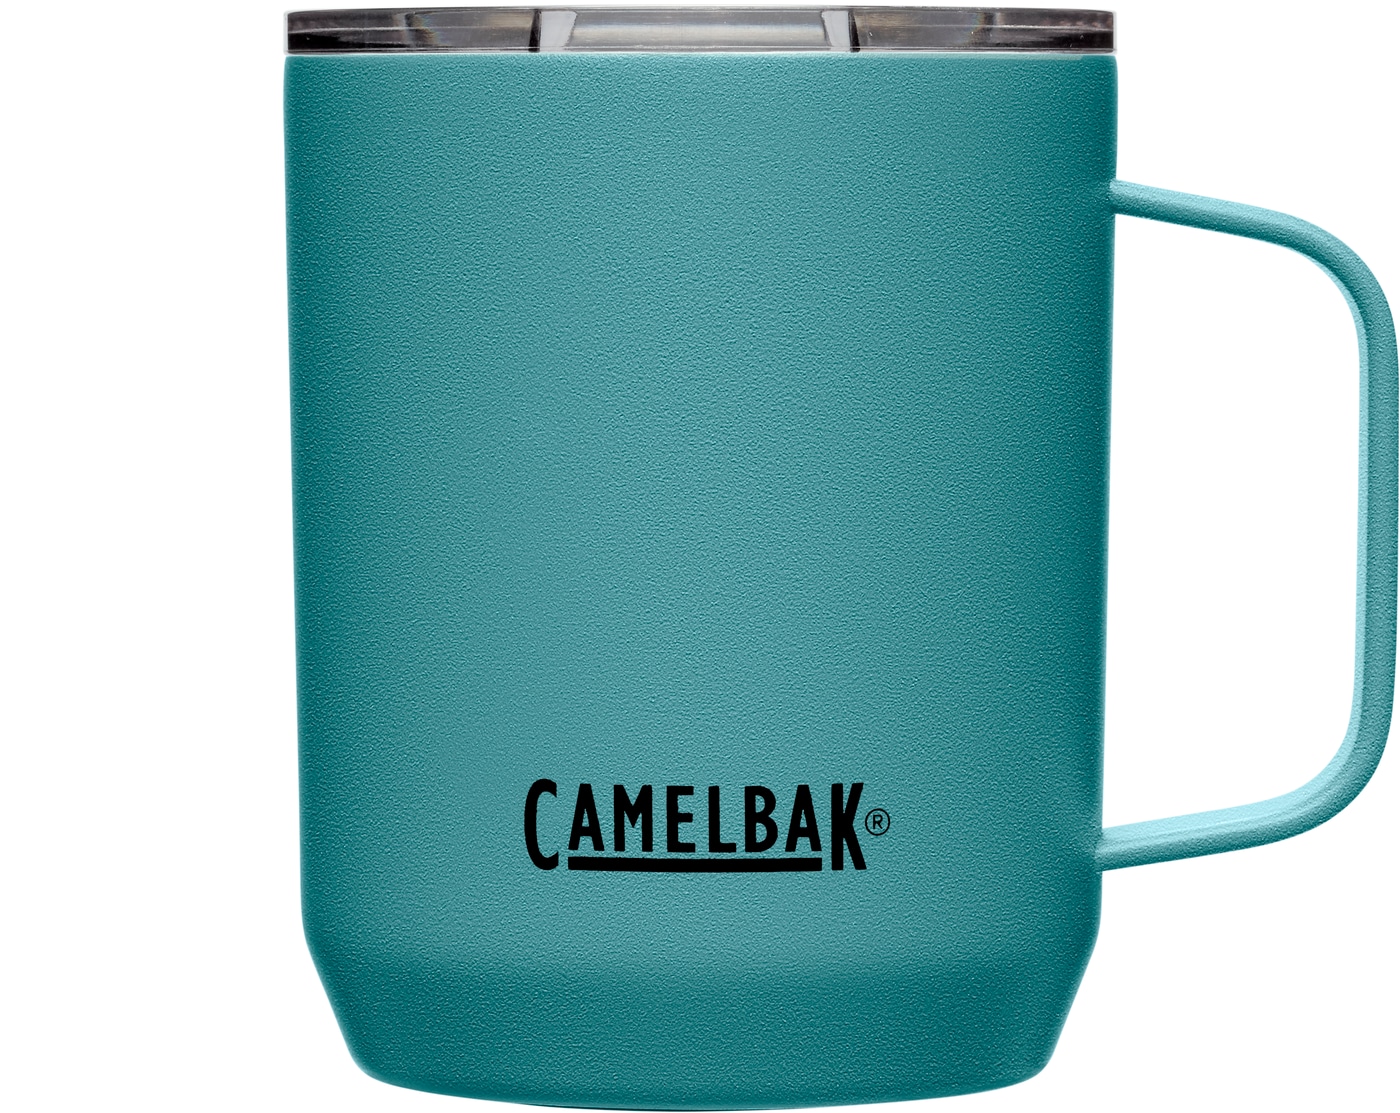 Camelbak Camp Mug